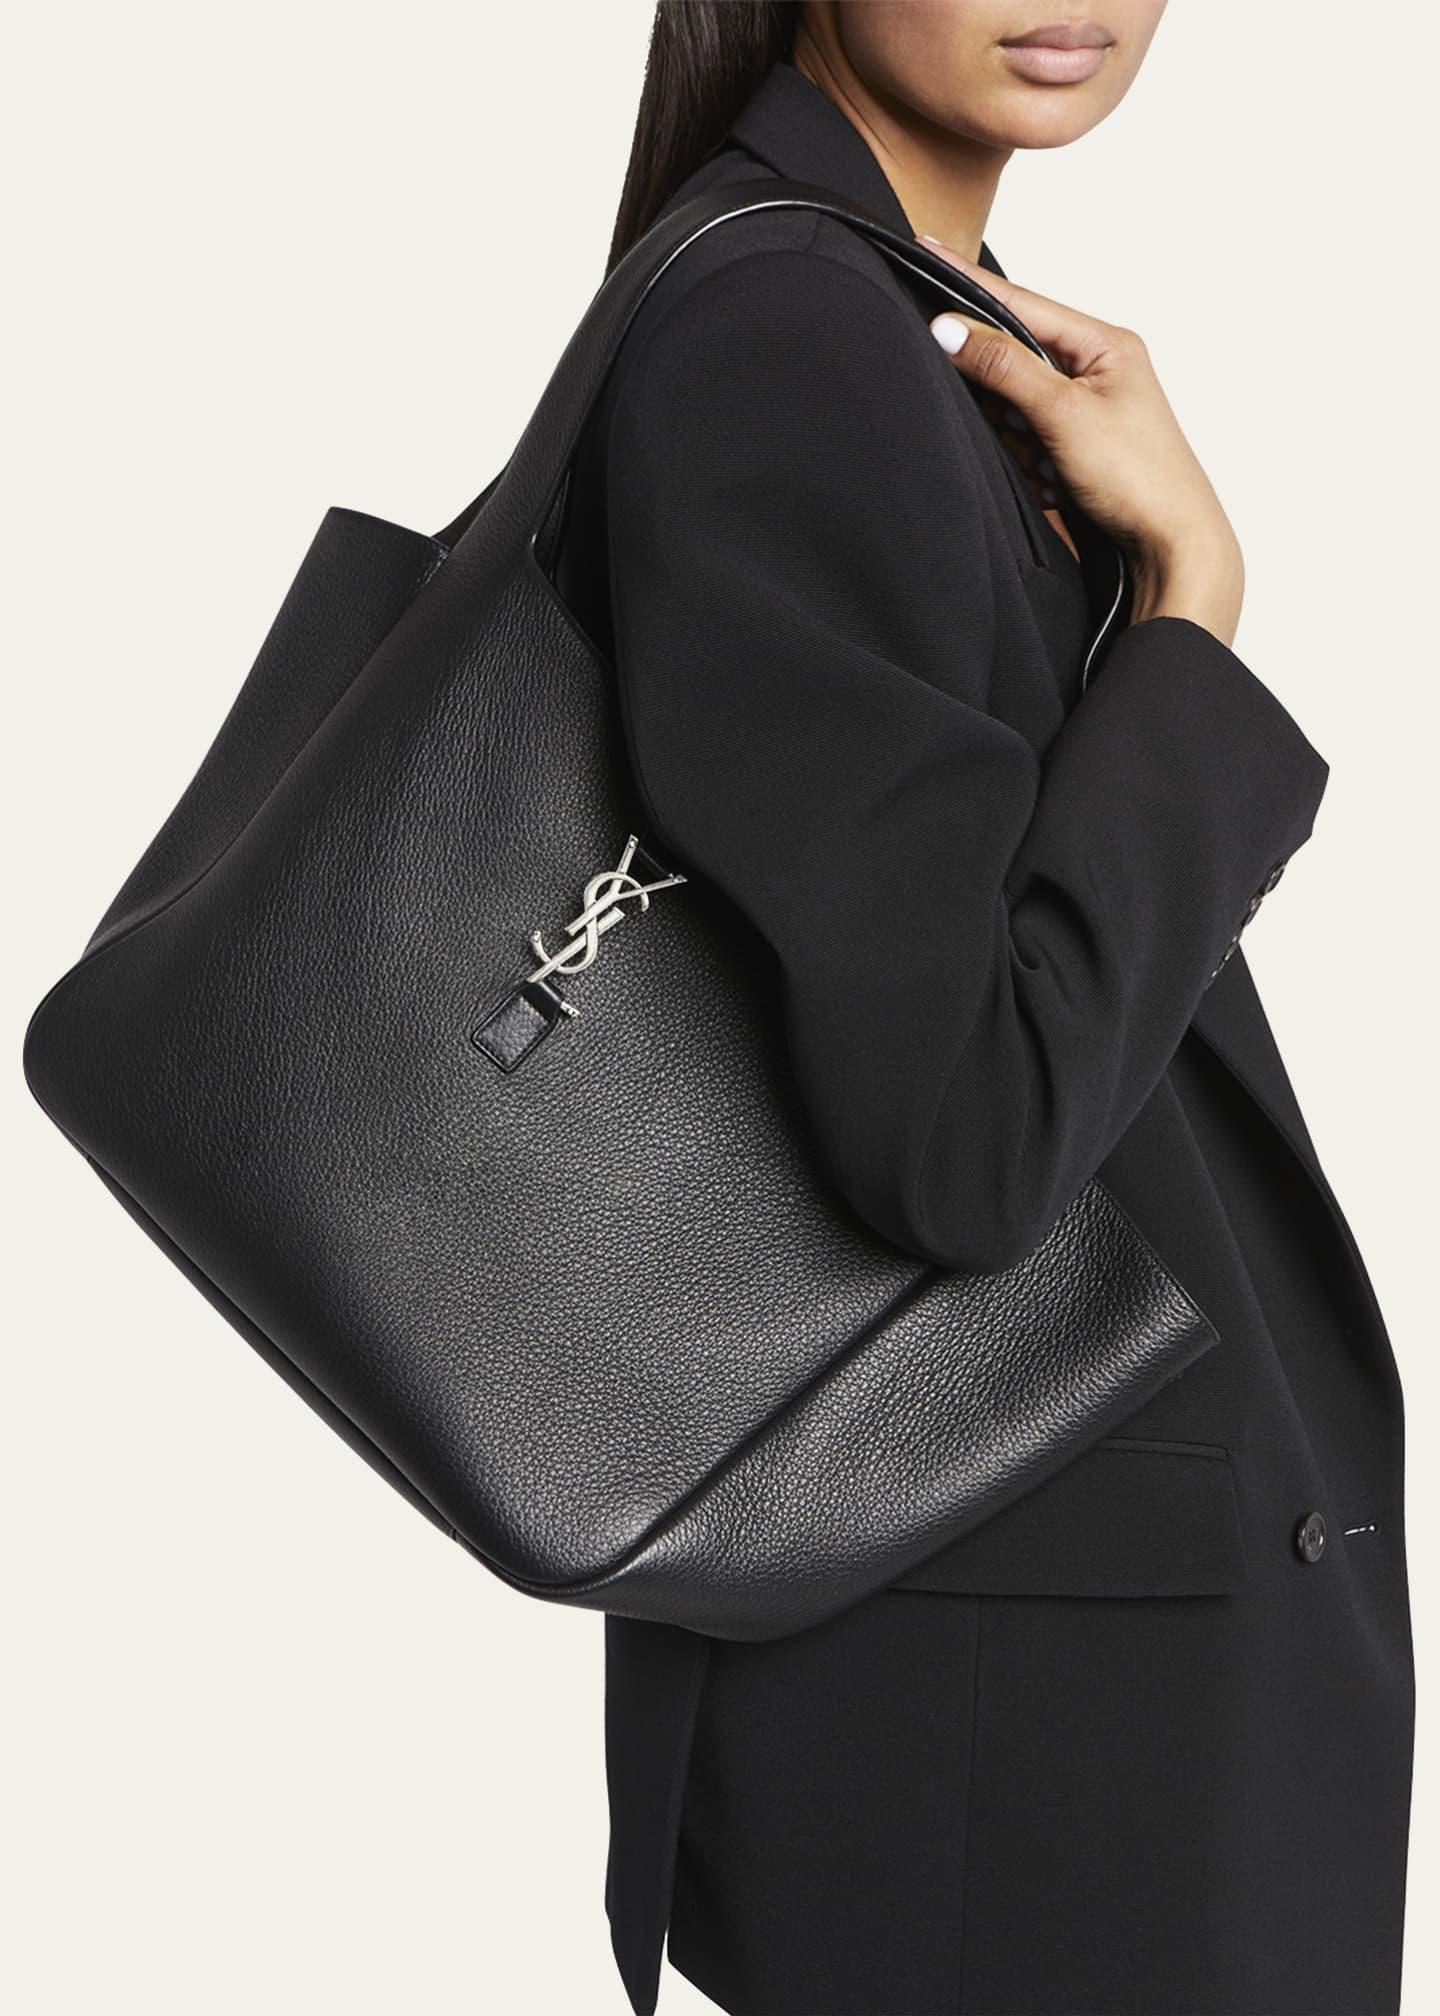 Saint Laurent Bea Cabas YSL Tote Bag in Supple Leather - Bergdorf Goodman